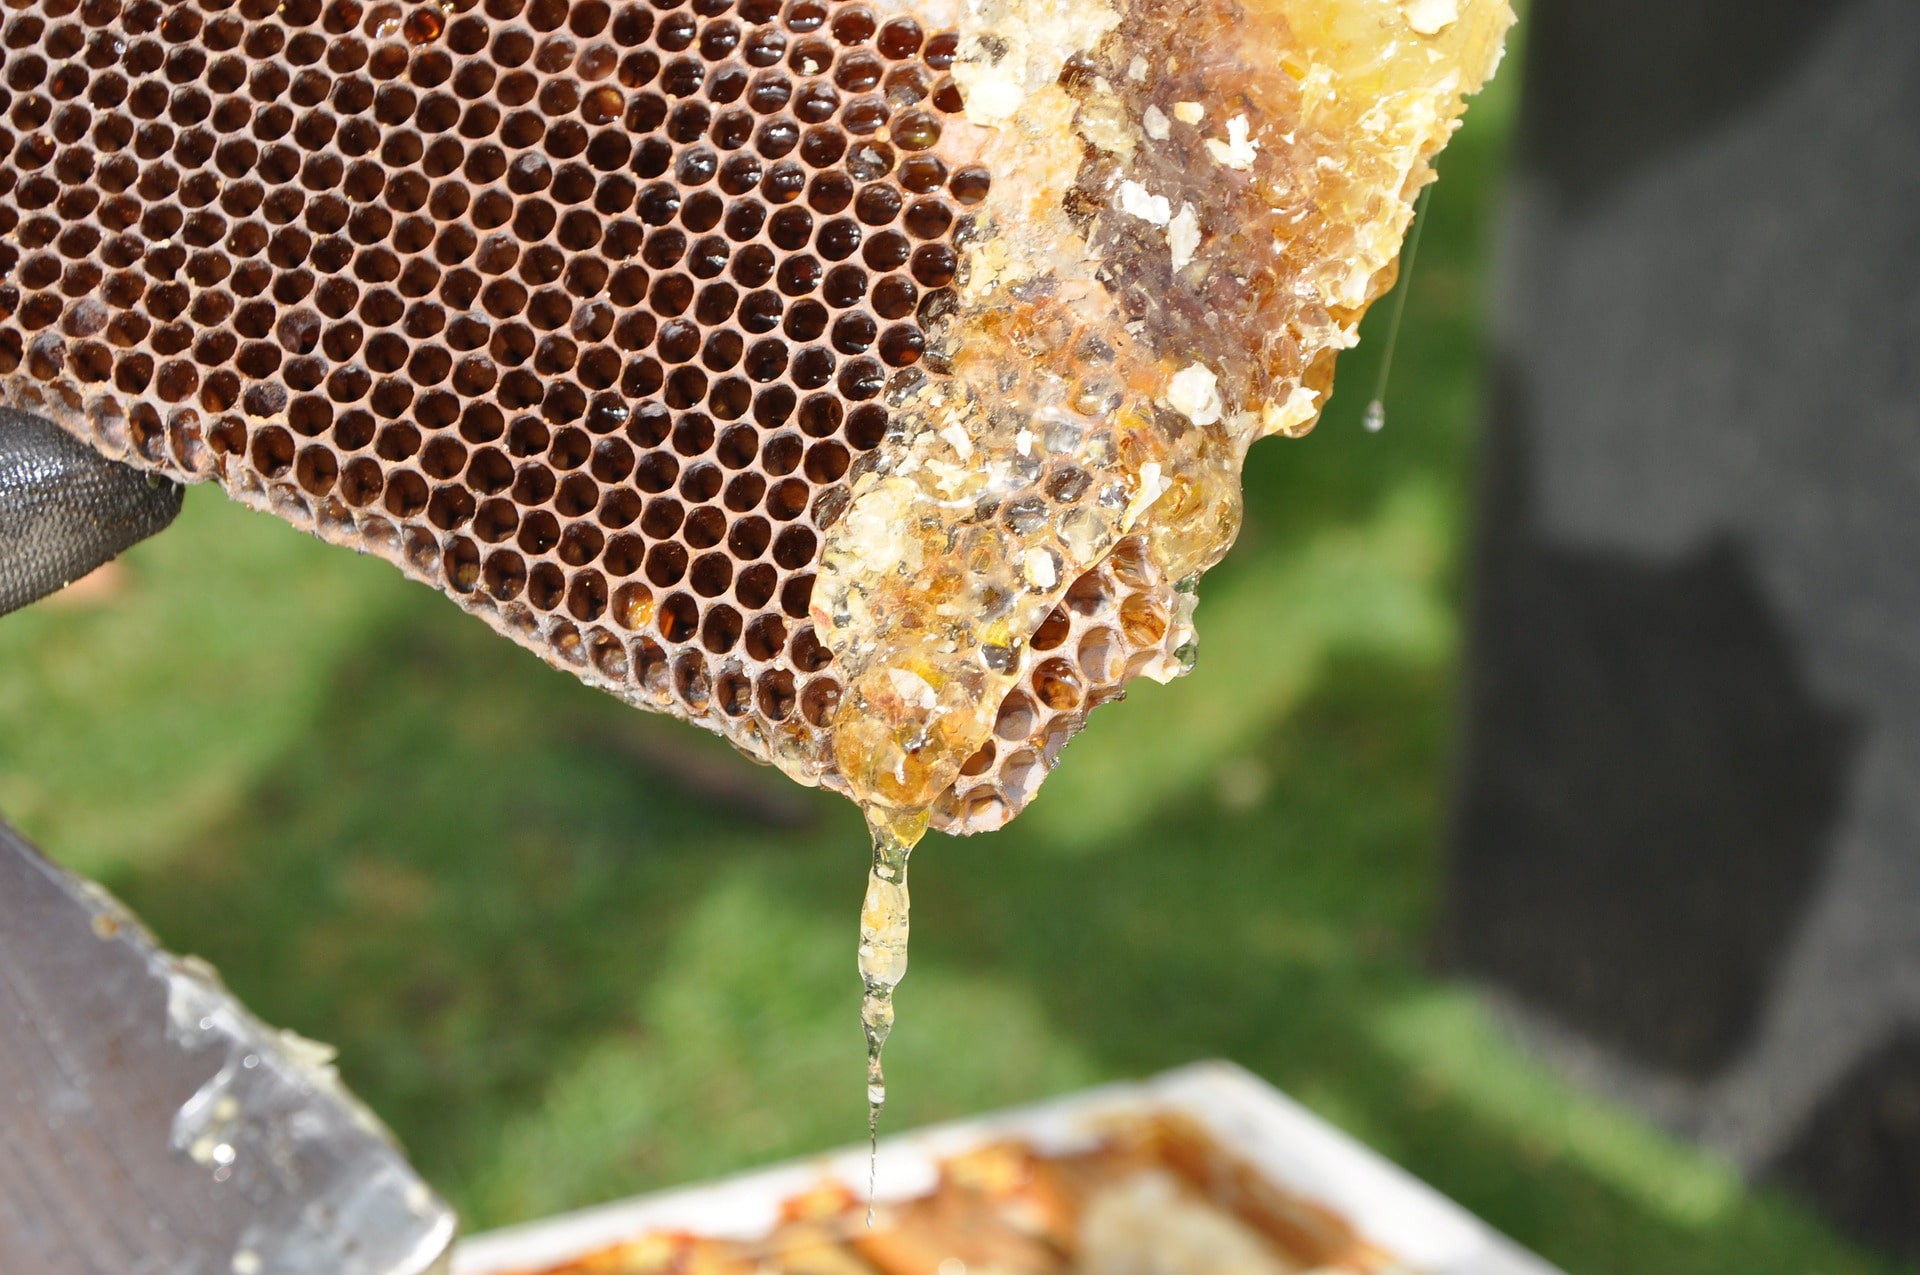 beekeeper-g696171e08_1920-min.jpg